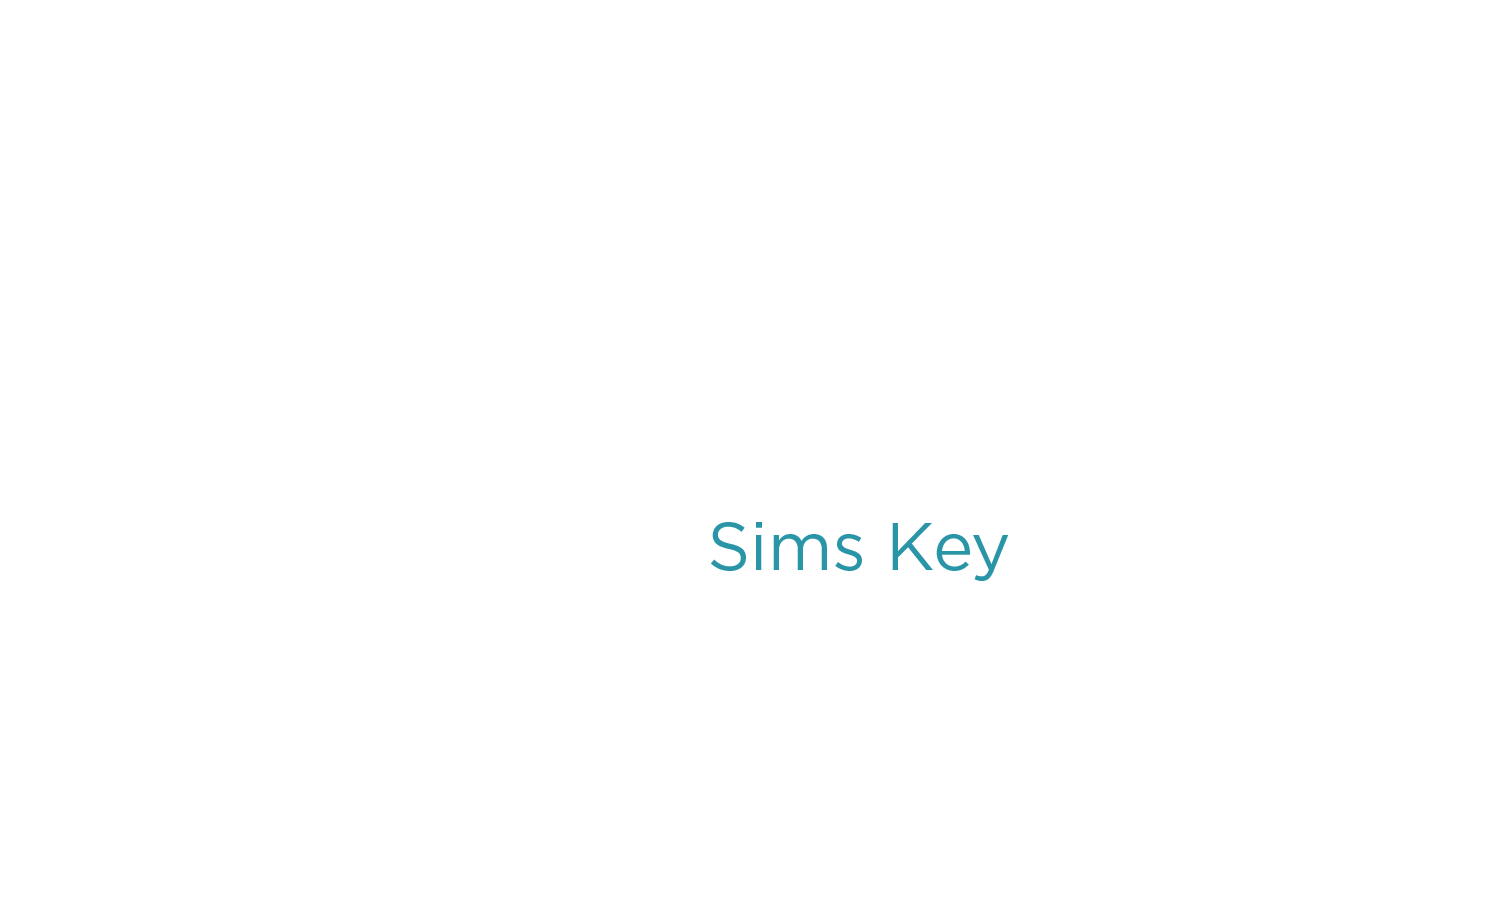 Sims Key - Sims Key